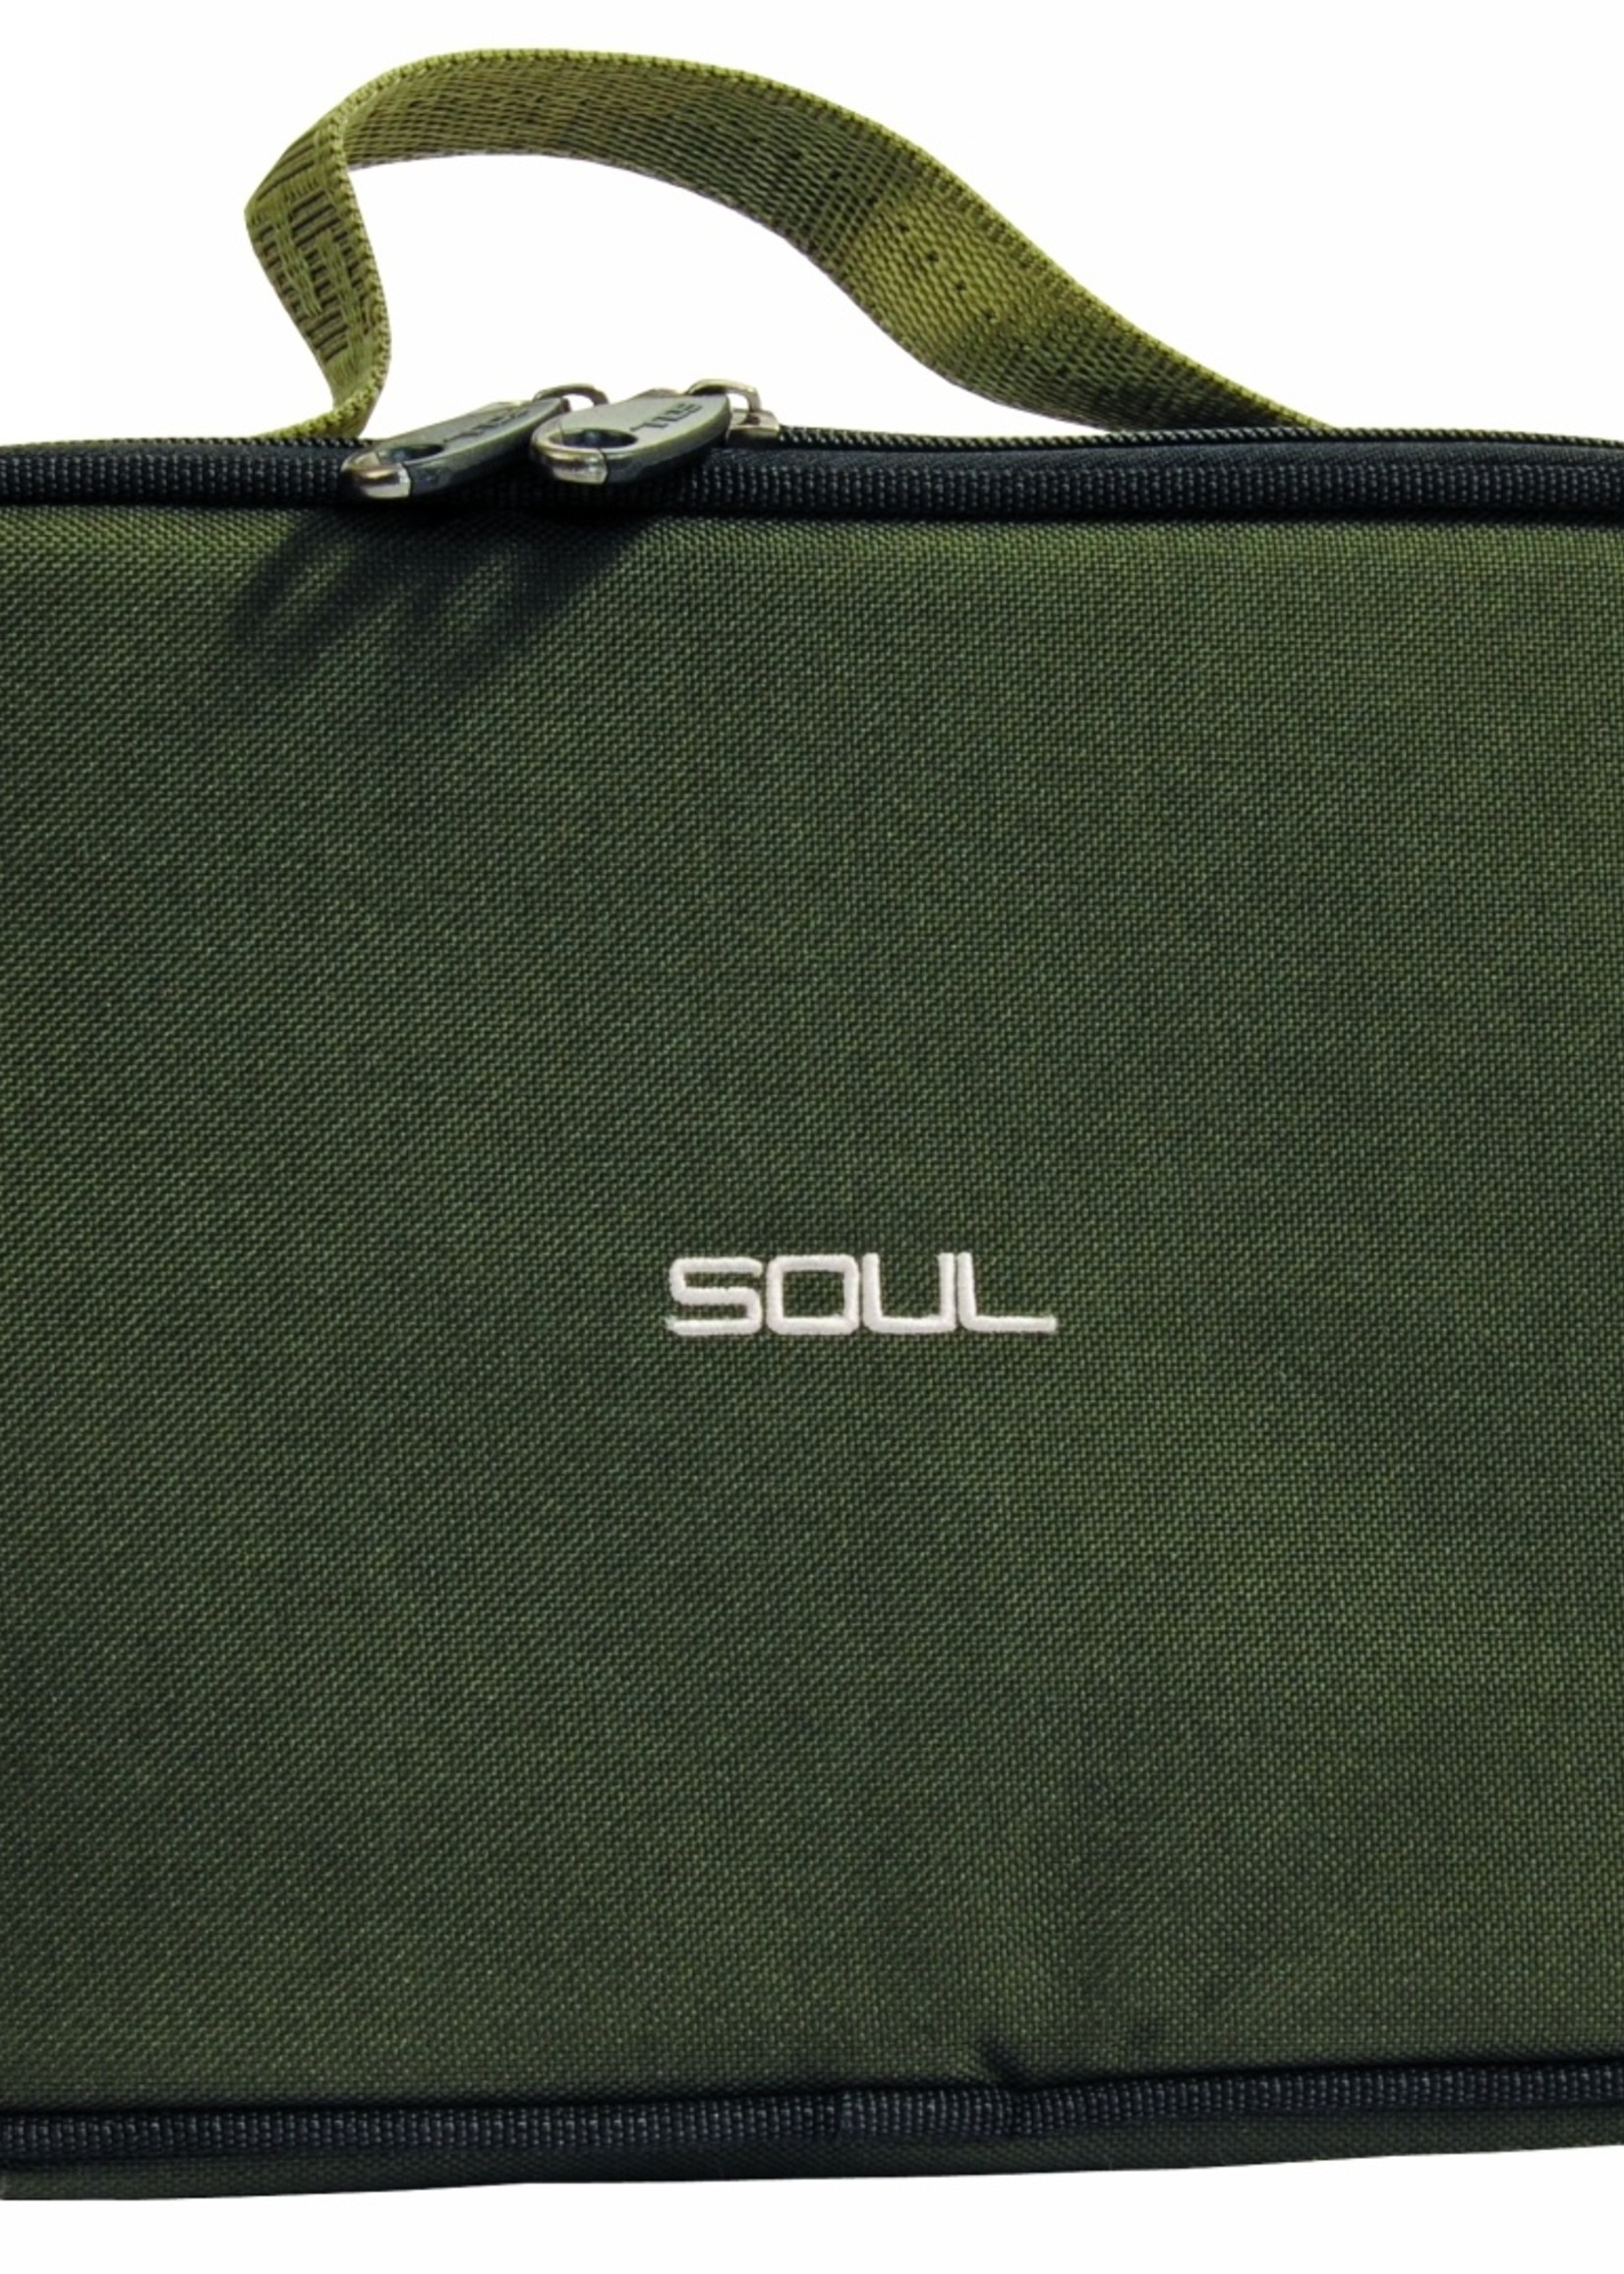 Soul Soft tackle box | Tacklebox | Soul